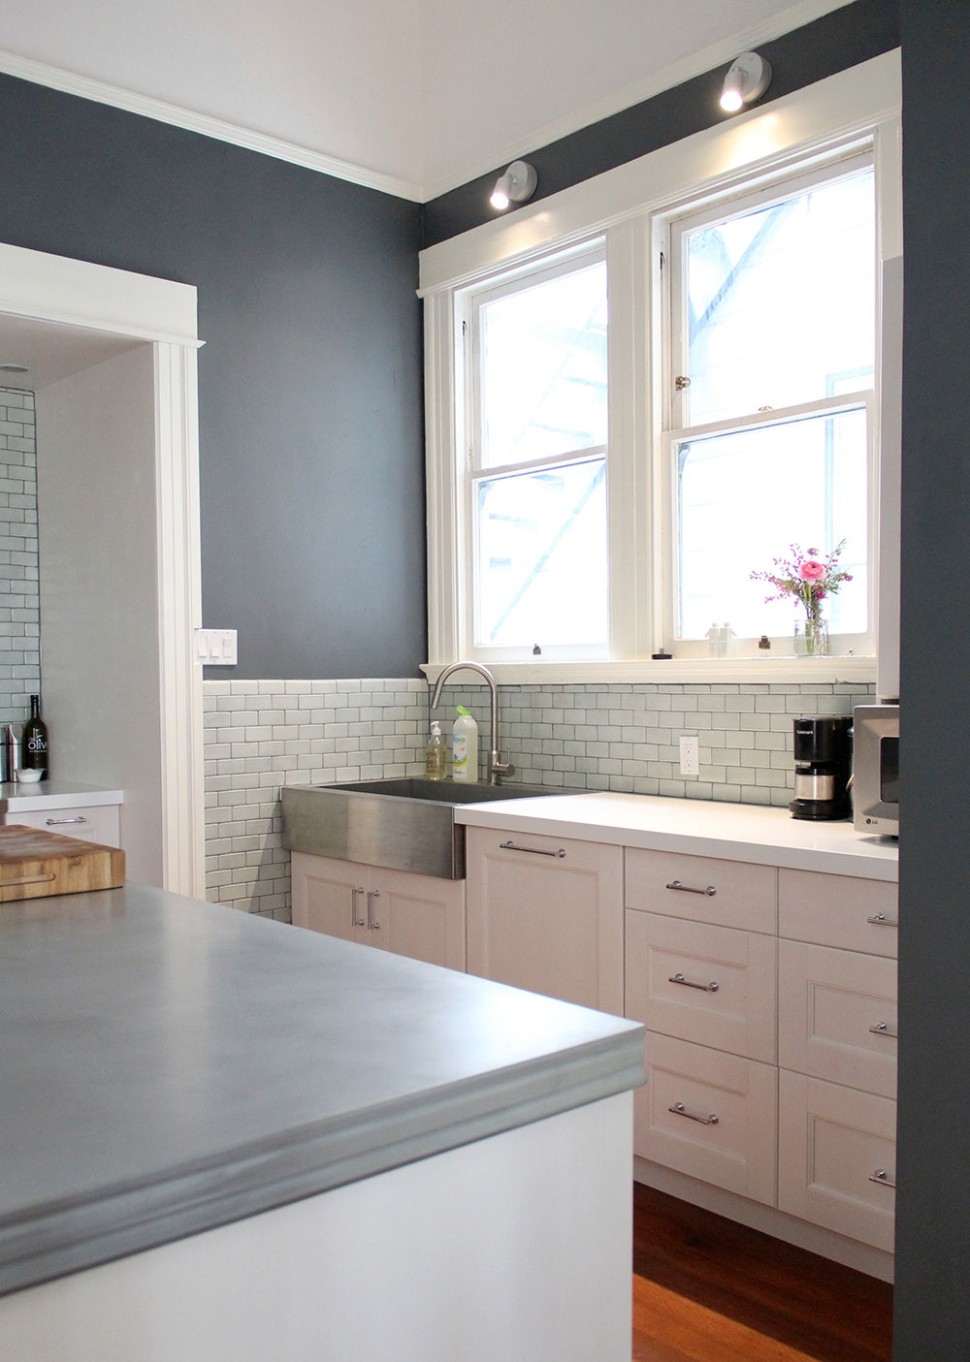 5 Gorgeous Gray Kitchen Ideas - How to Use Gray in Kitchens  - grey kitchen walls